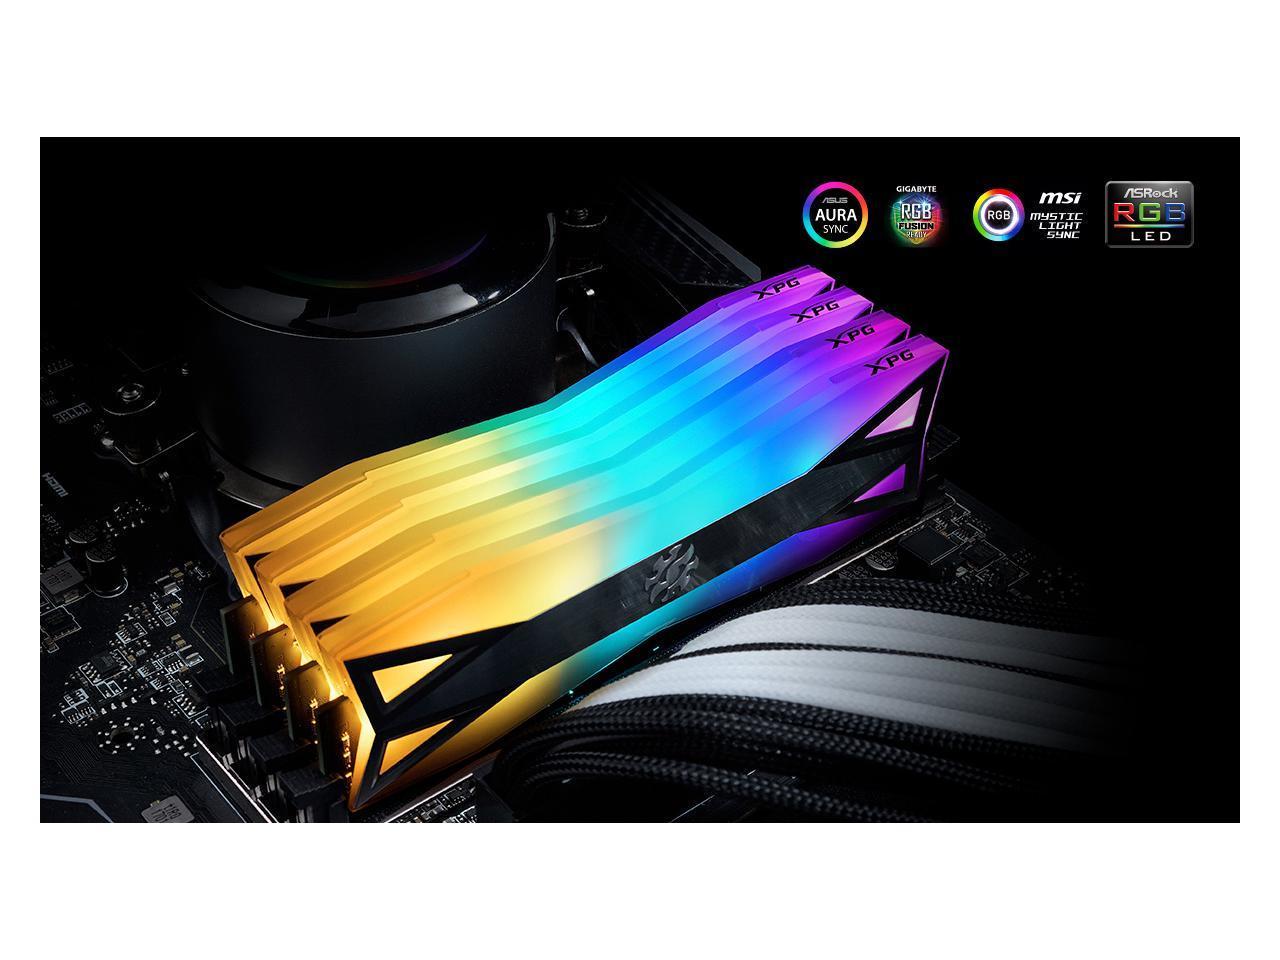 XPG SPECTRIX D60G RGB Desktop Memory Series: 32GB (2x16GB) DDR4 3000MHz CL16 GREY